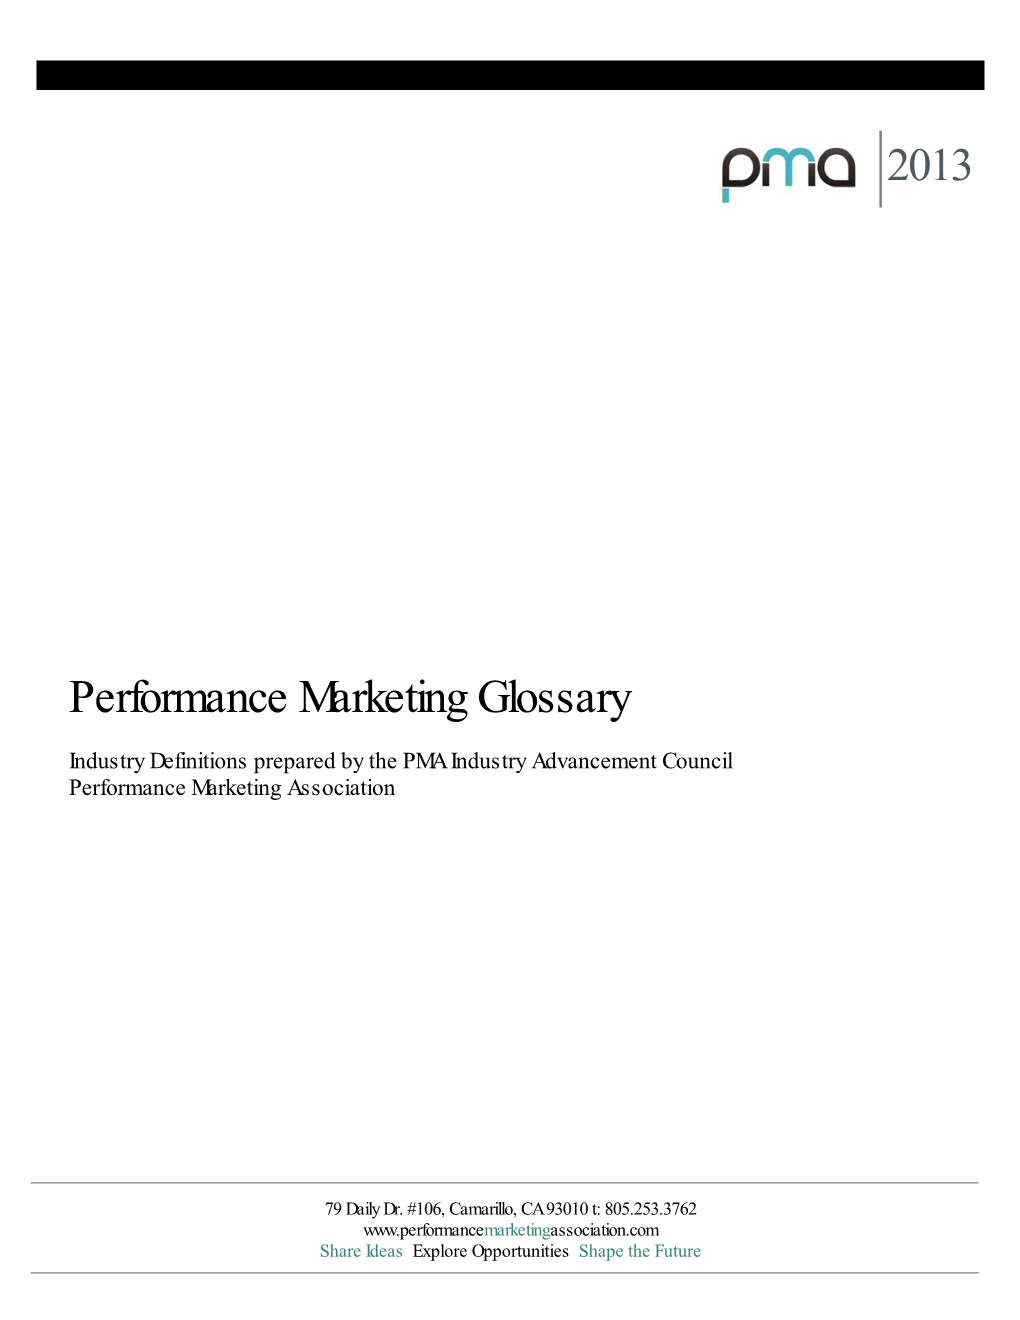 Performance Marketing Glossary 2013